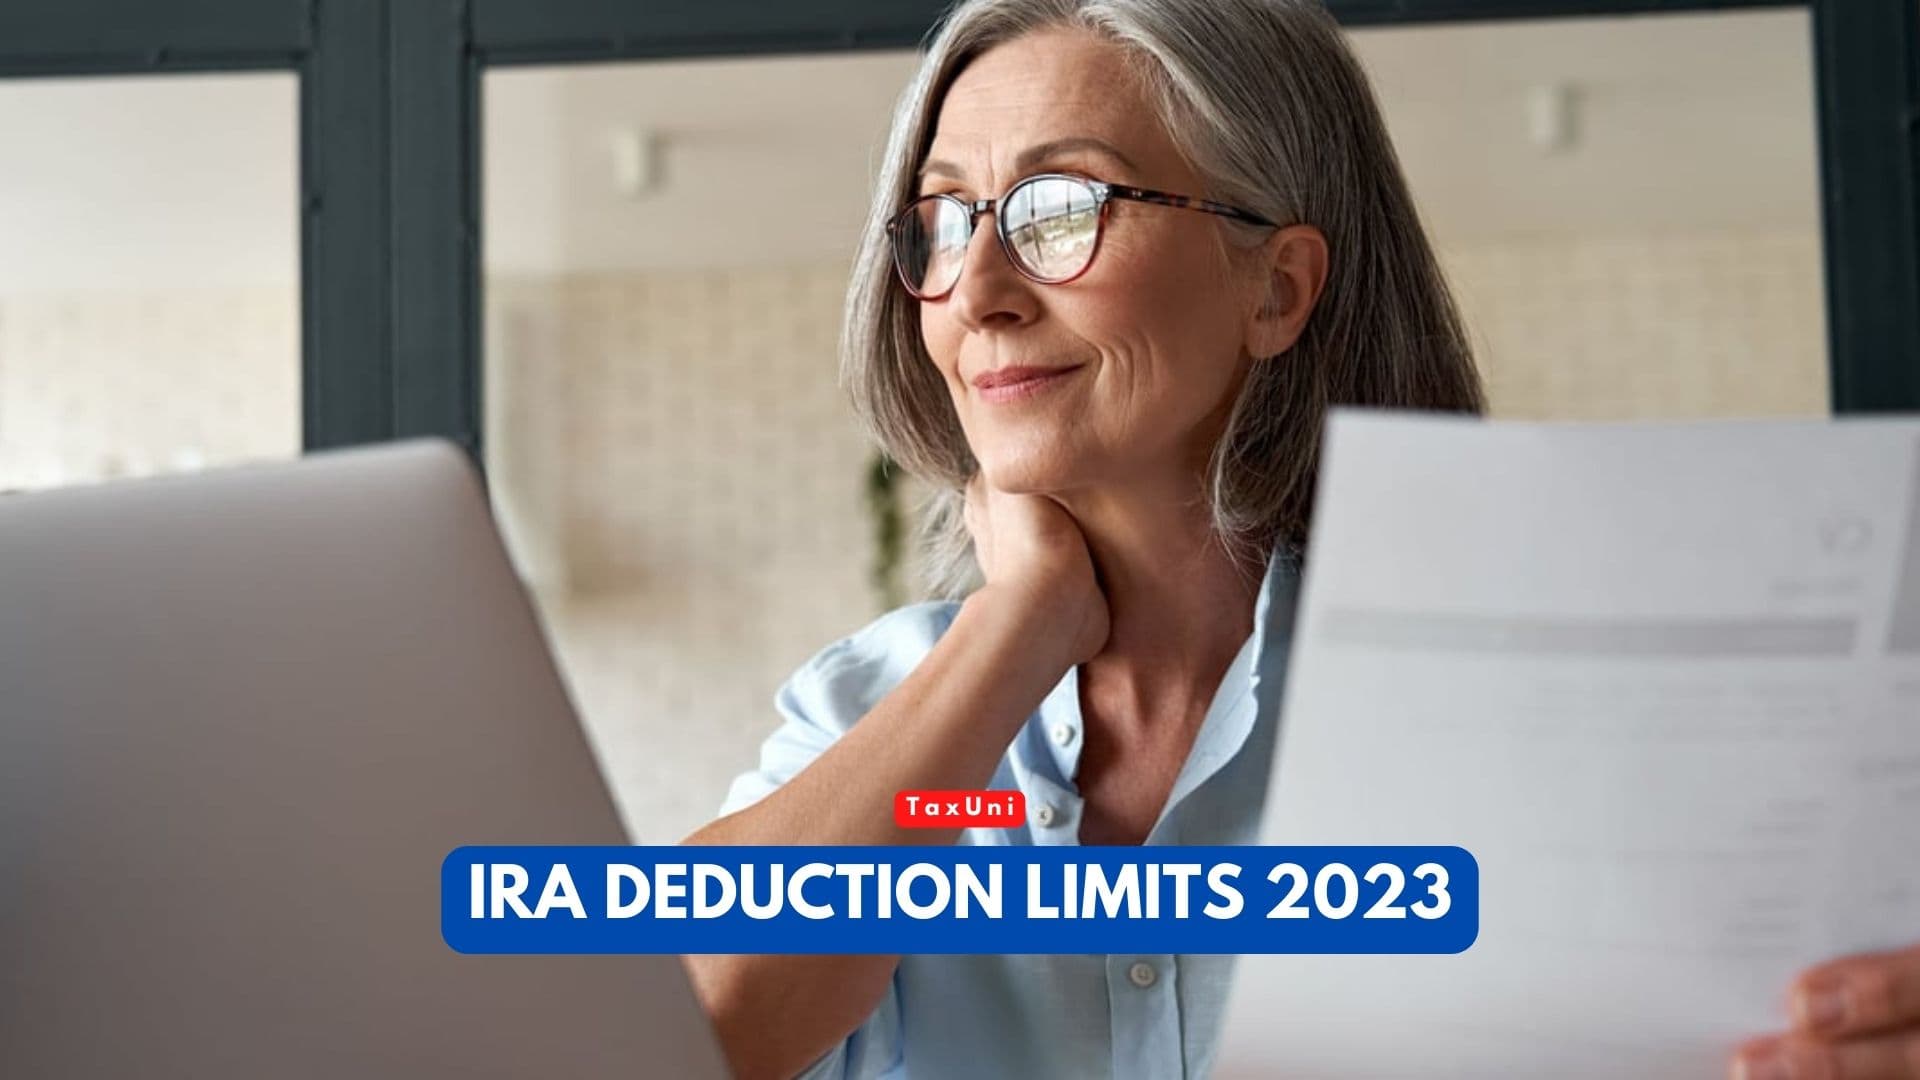 IRA-Deduction-Limits-2023-TaxUni-Cover-1